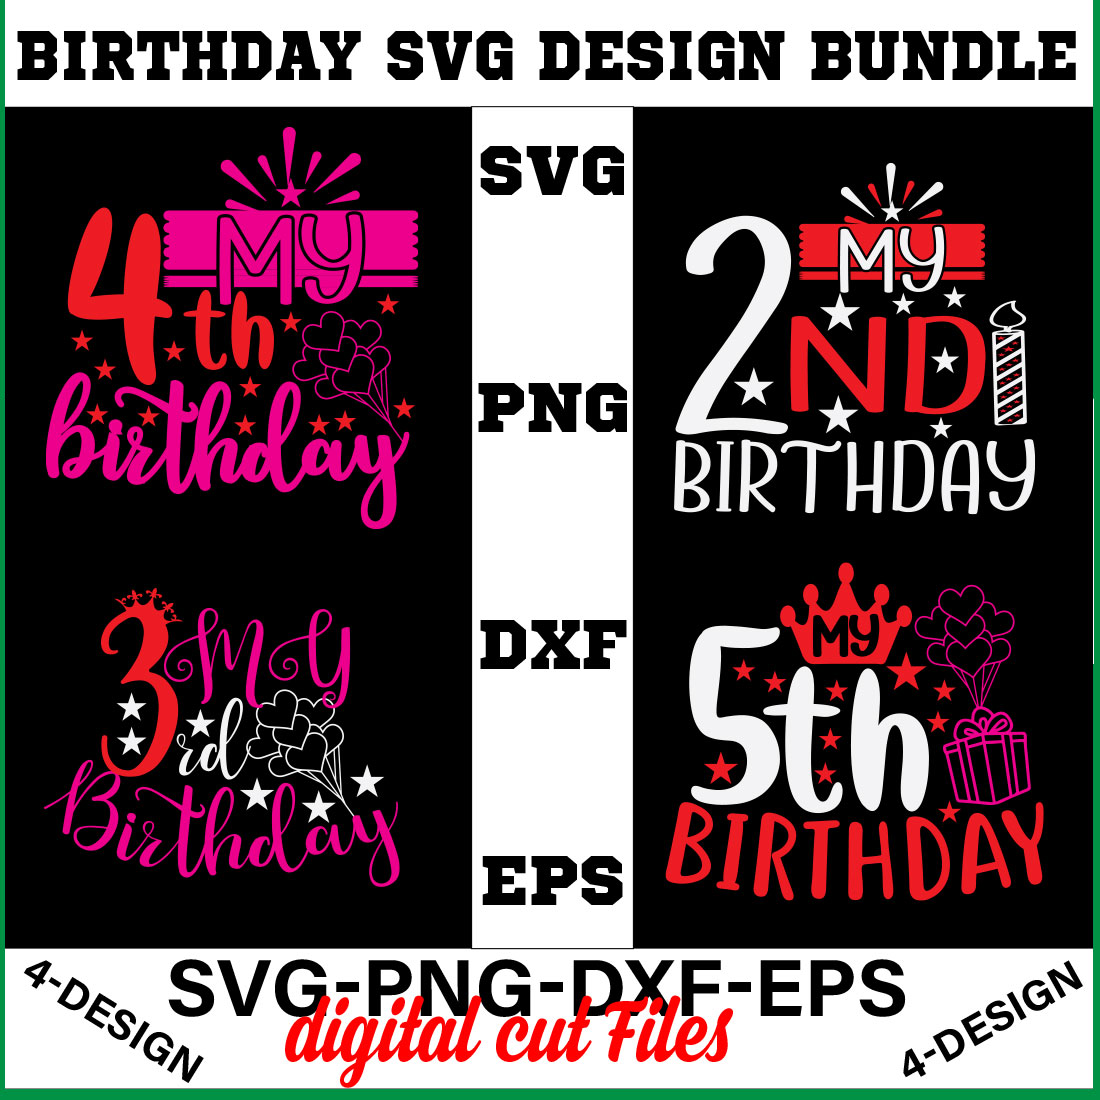 birthday svg design bundle Happy birthday svg bundle hand lettered birthday svg birthday party svg Volume-25 cover image.